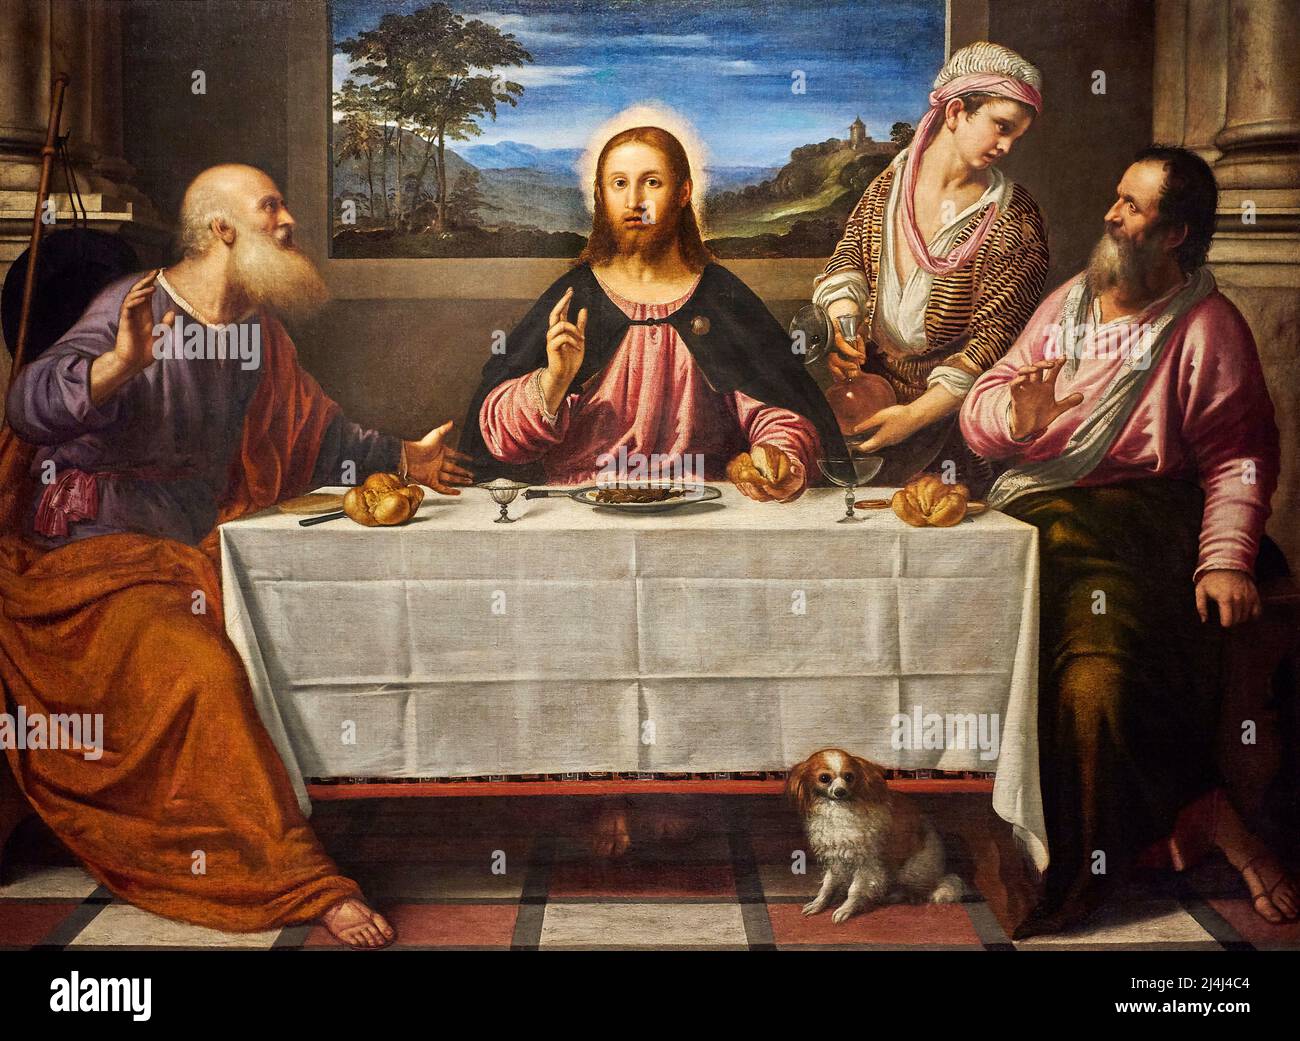 Cena in Emmaus  - olio su tela - Simone Peterzano - 15765 - Firenze, Galleria Palatina di Palazzo Pitti Stock Photo